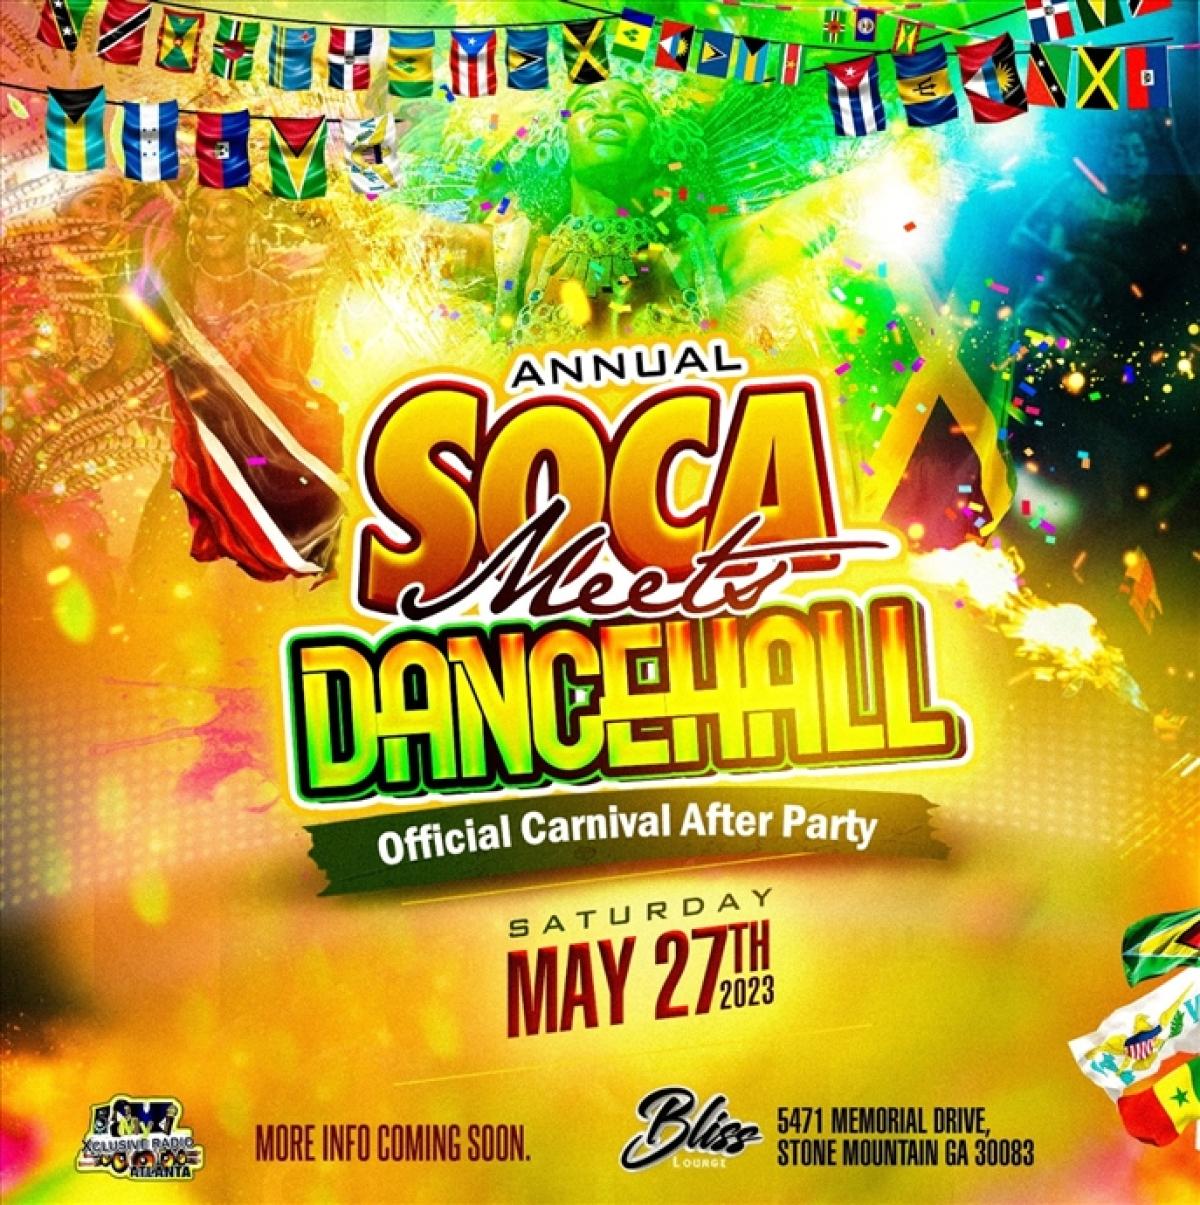 Soca Meets Dancehall flyer or graphic.